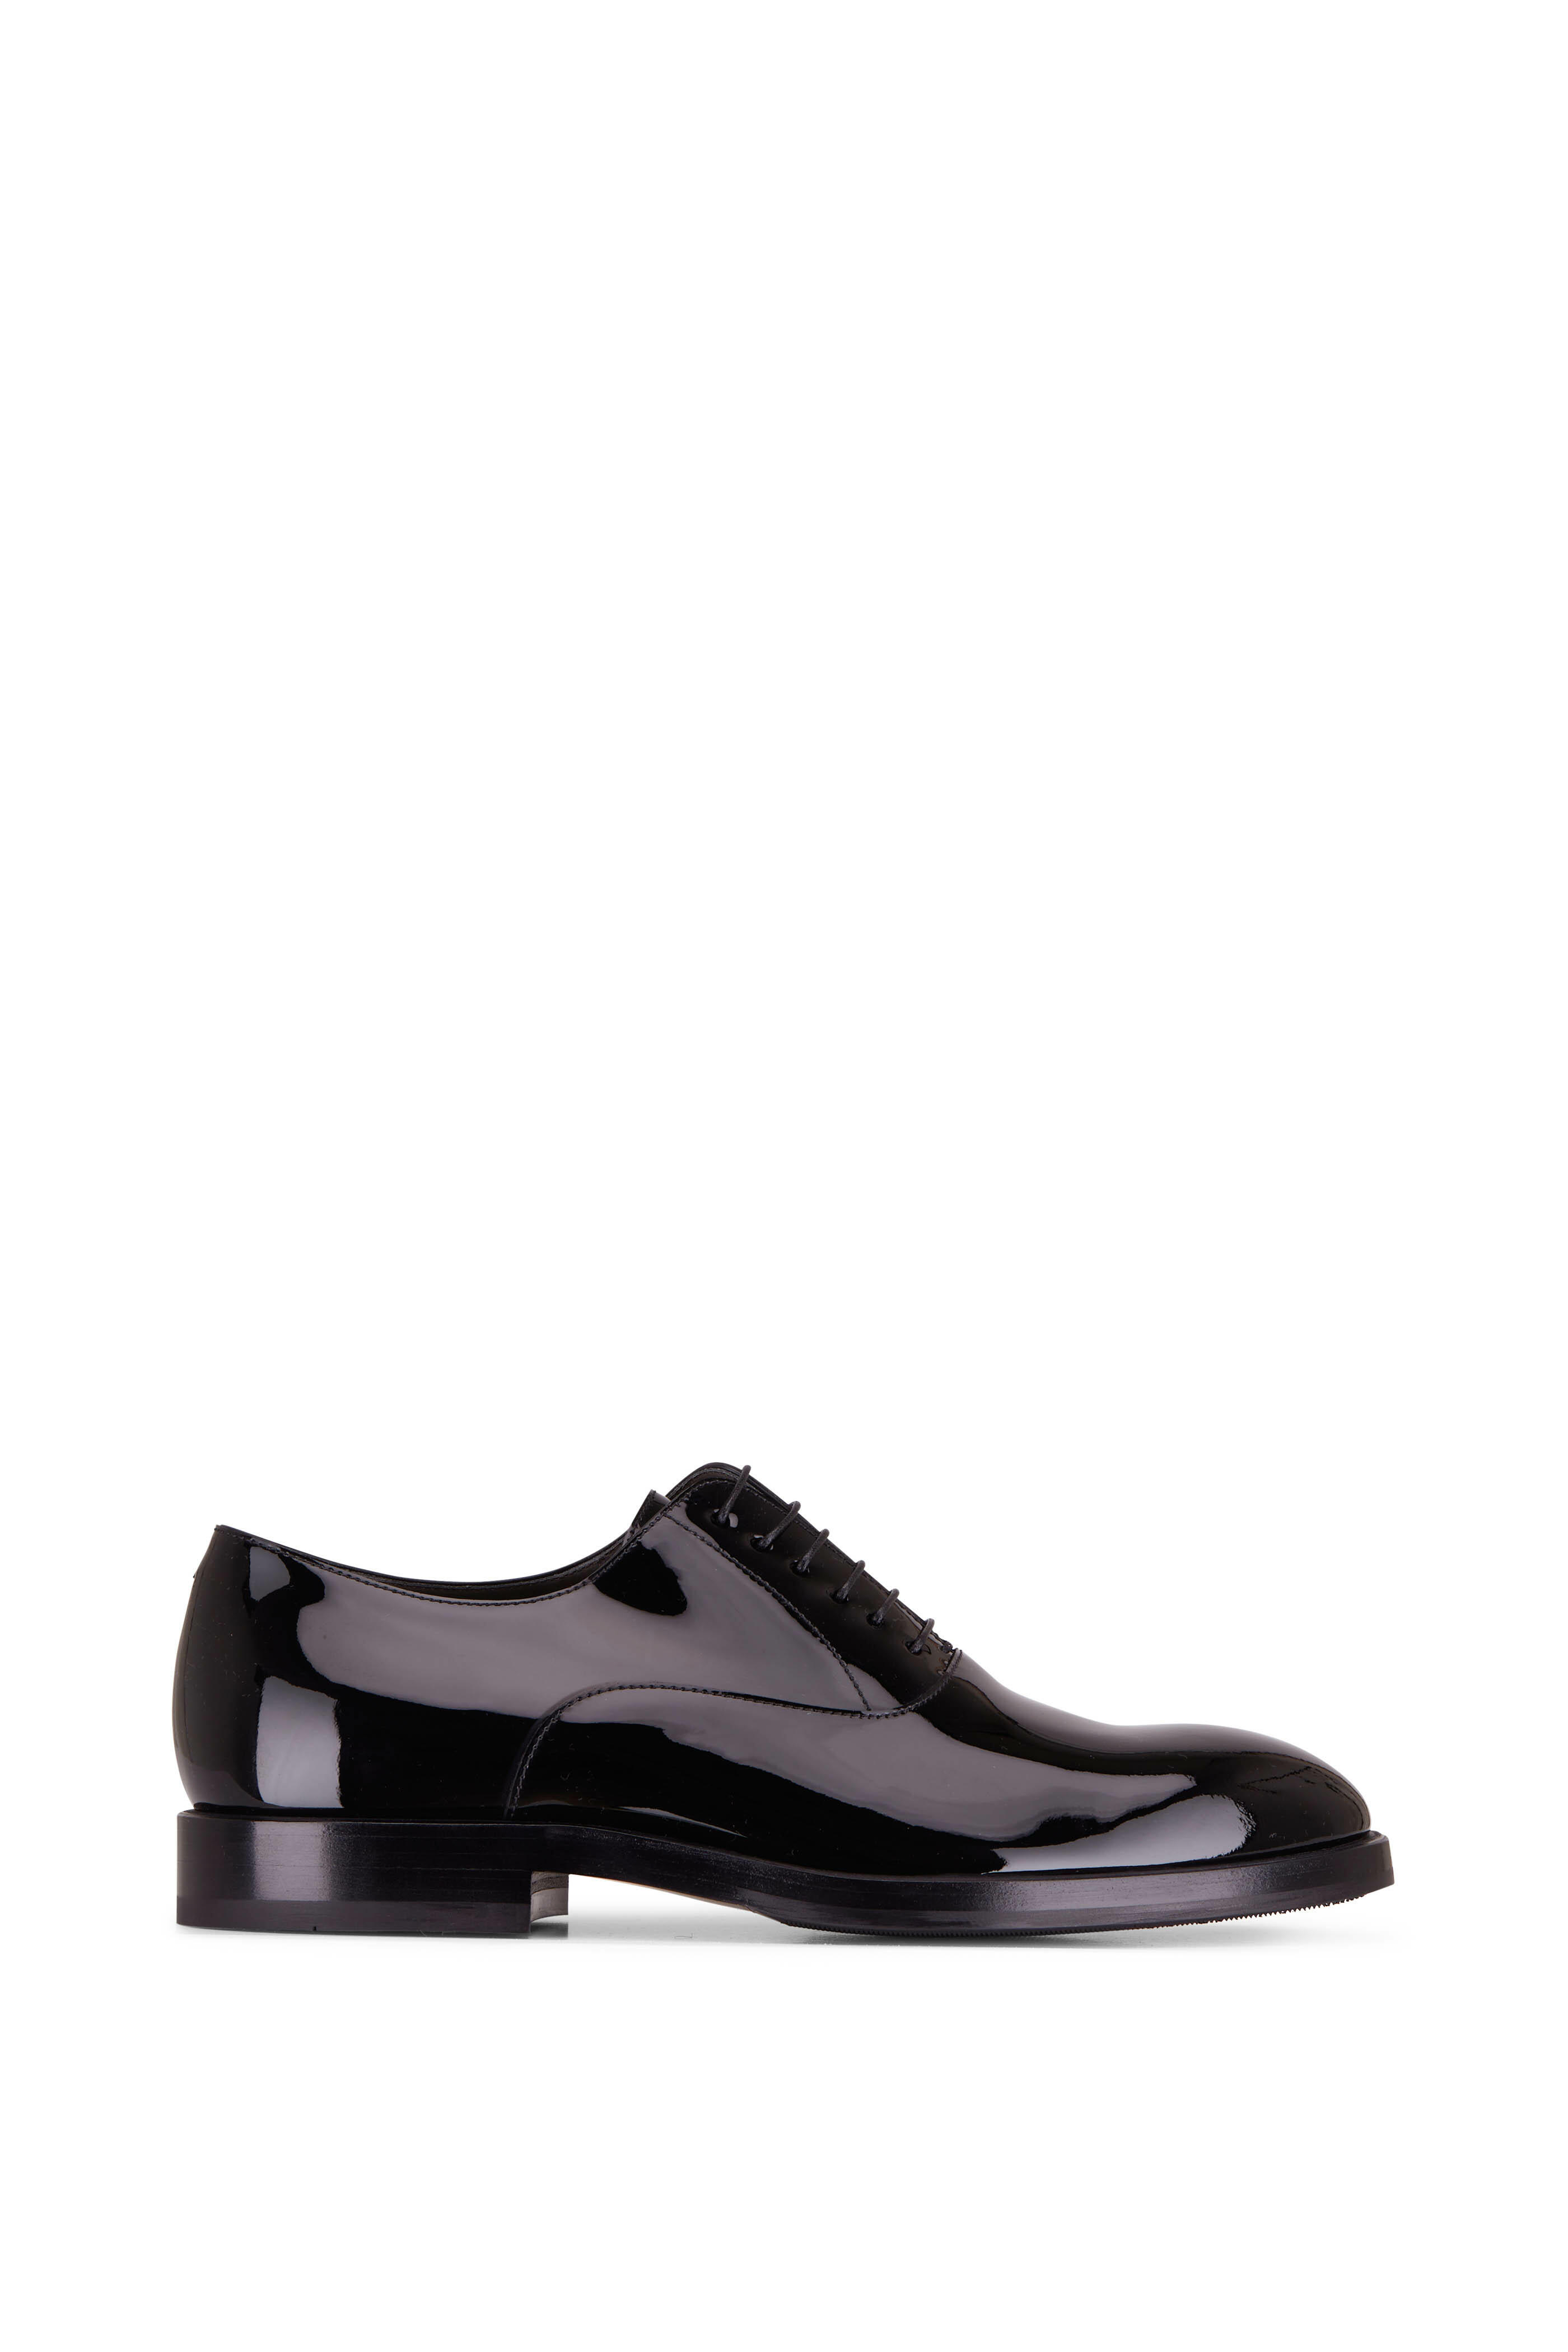 Brunello Cucinelli - Black Leather Tuxedo Shoe